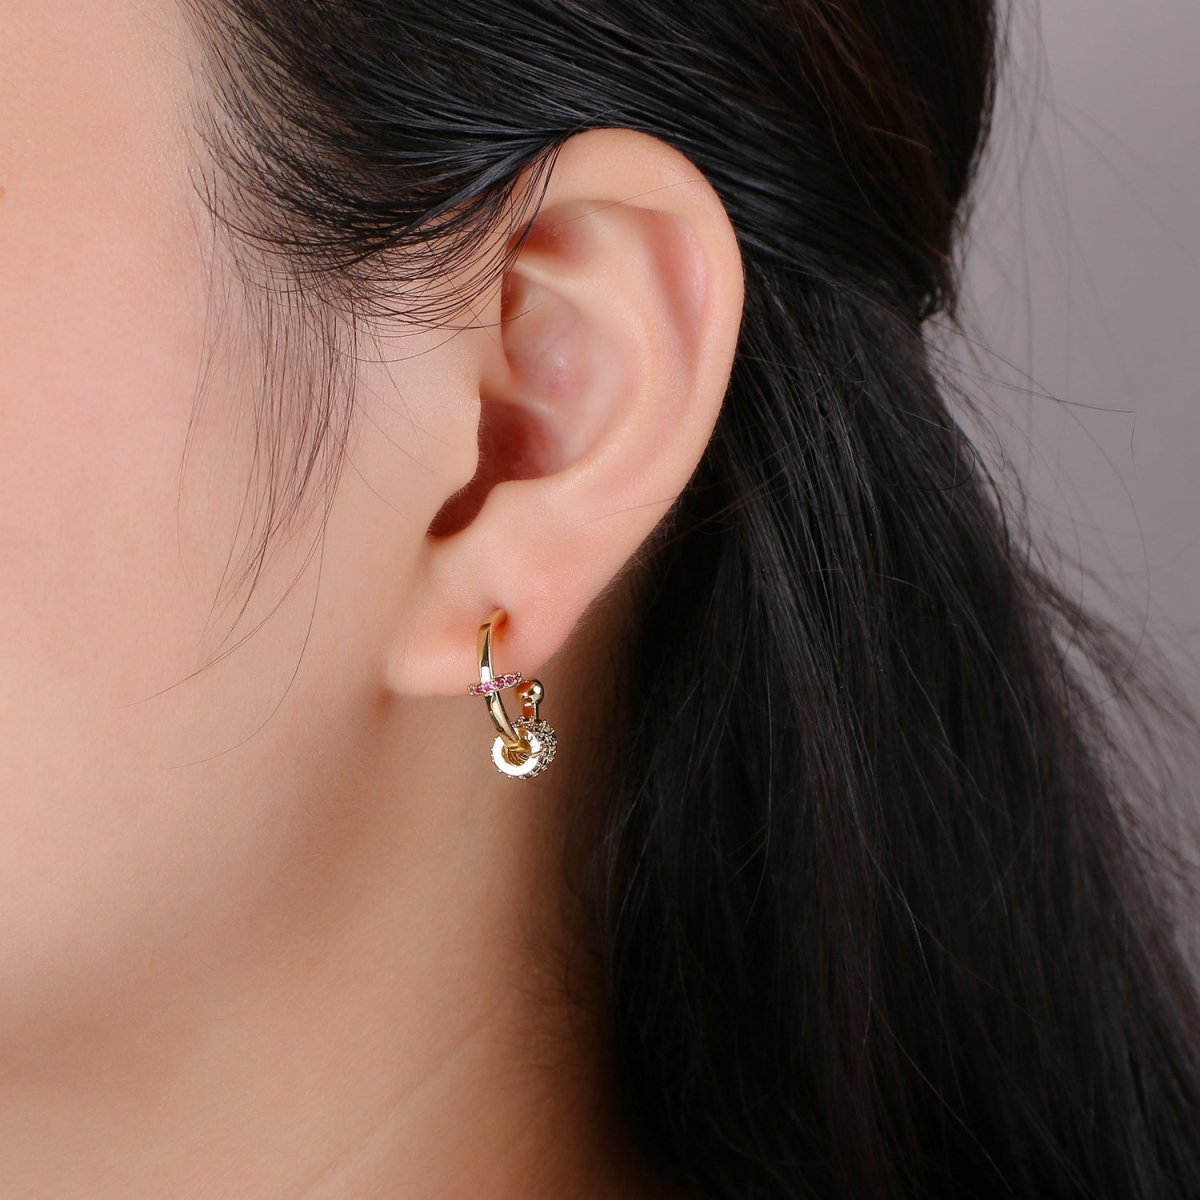 24k Gold Earrings, Hoop Earrings, Medium Hoop, Stud Earring, Gold Plated Earring, Gift for Her, Everyday Wear Earring K-817 - DLUXCA